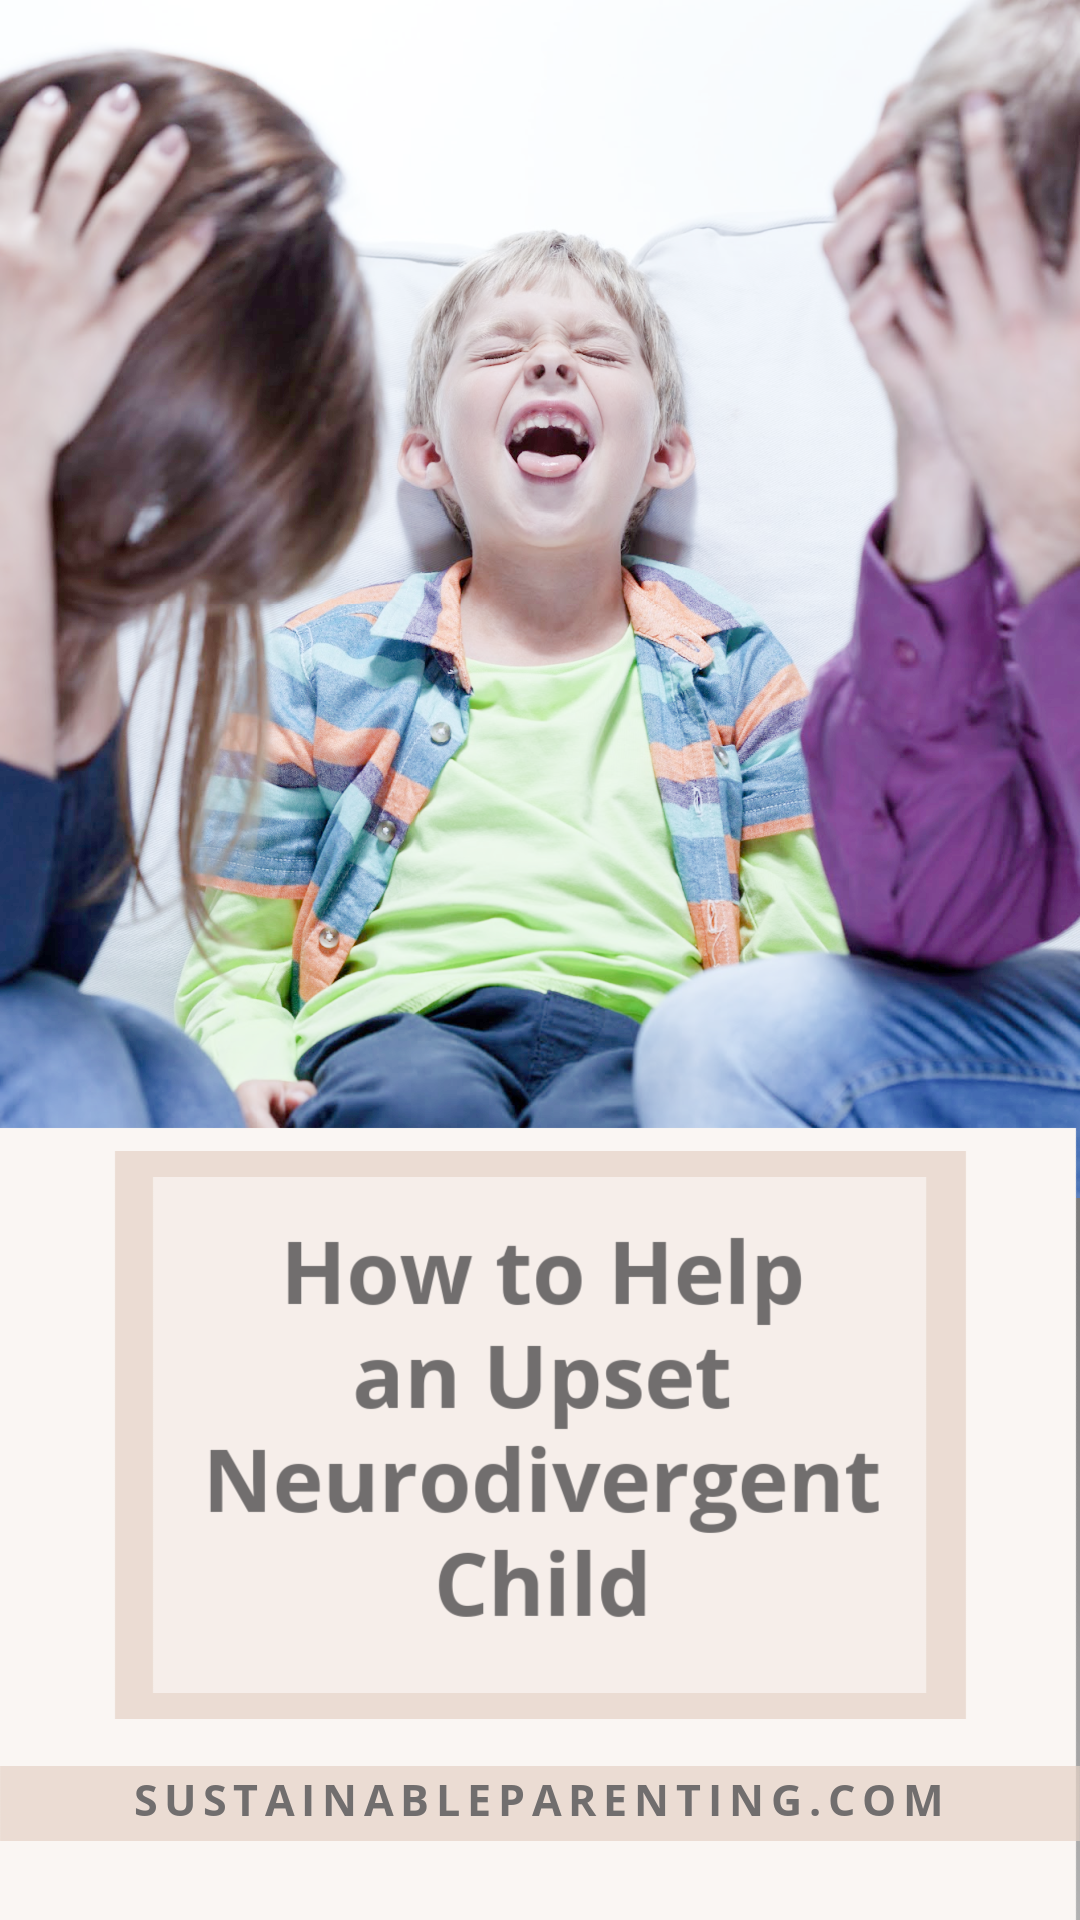 How to Help an Upset Neurodivergent Child